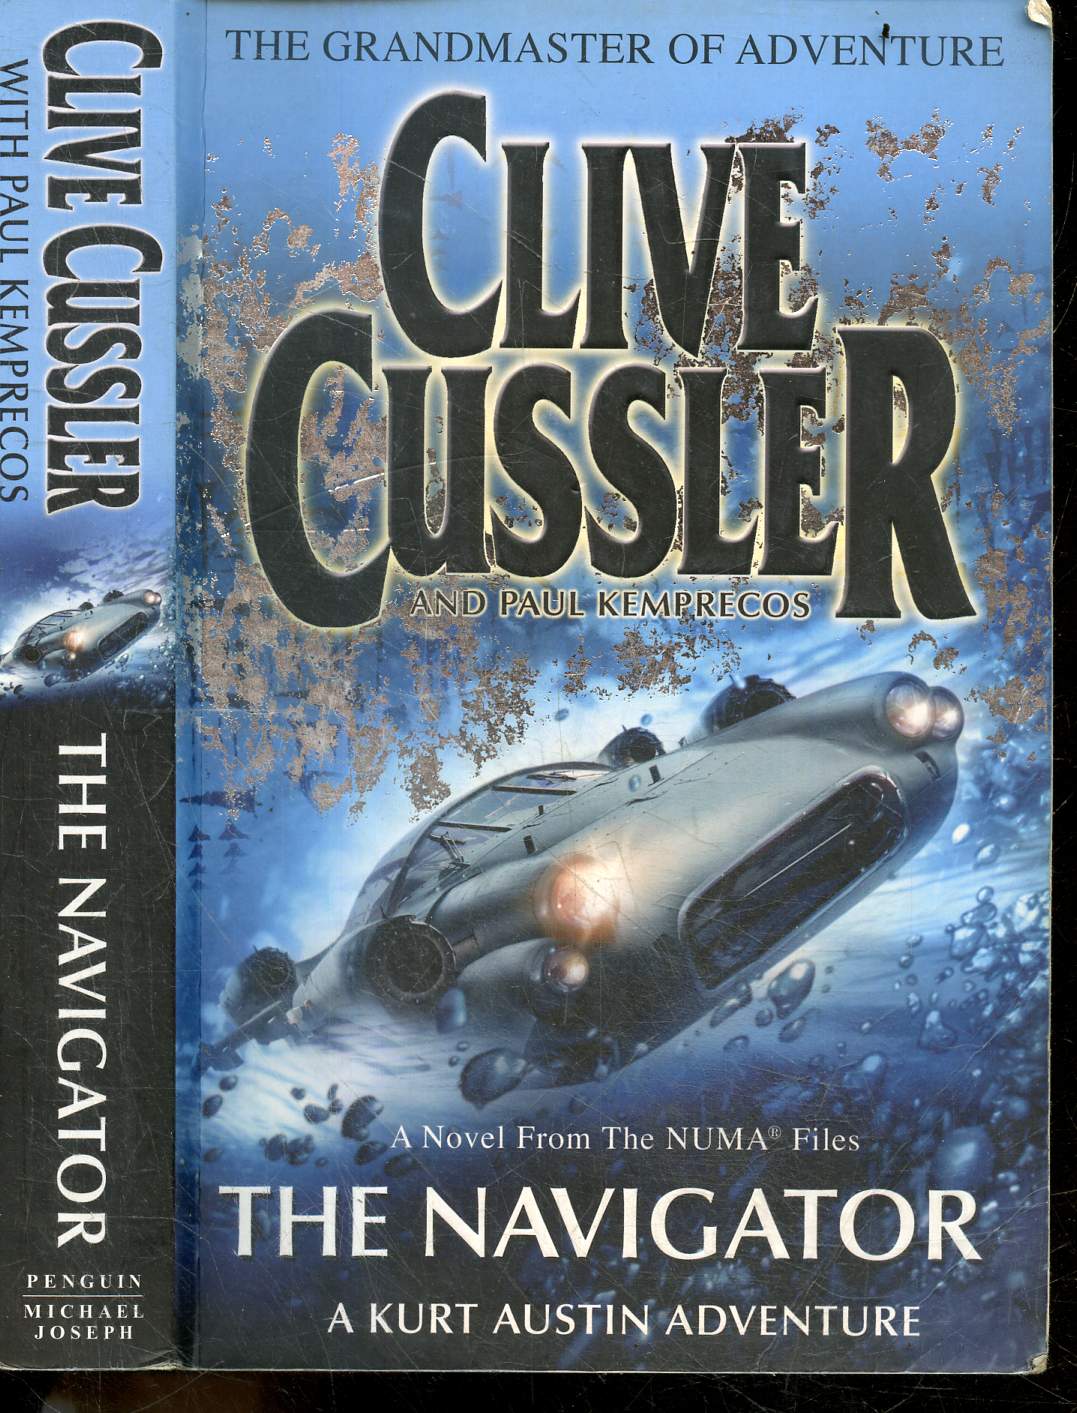 The Navigator - a kurt austin adventure - novel from the Numa files